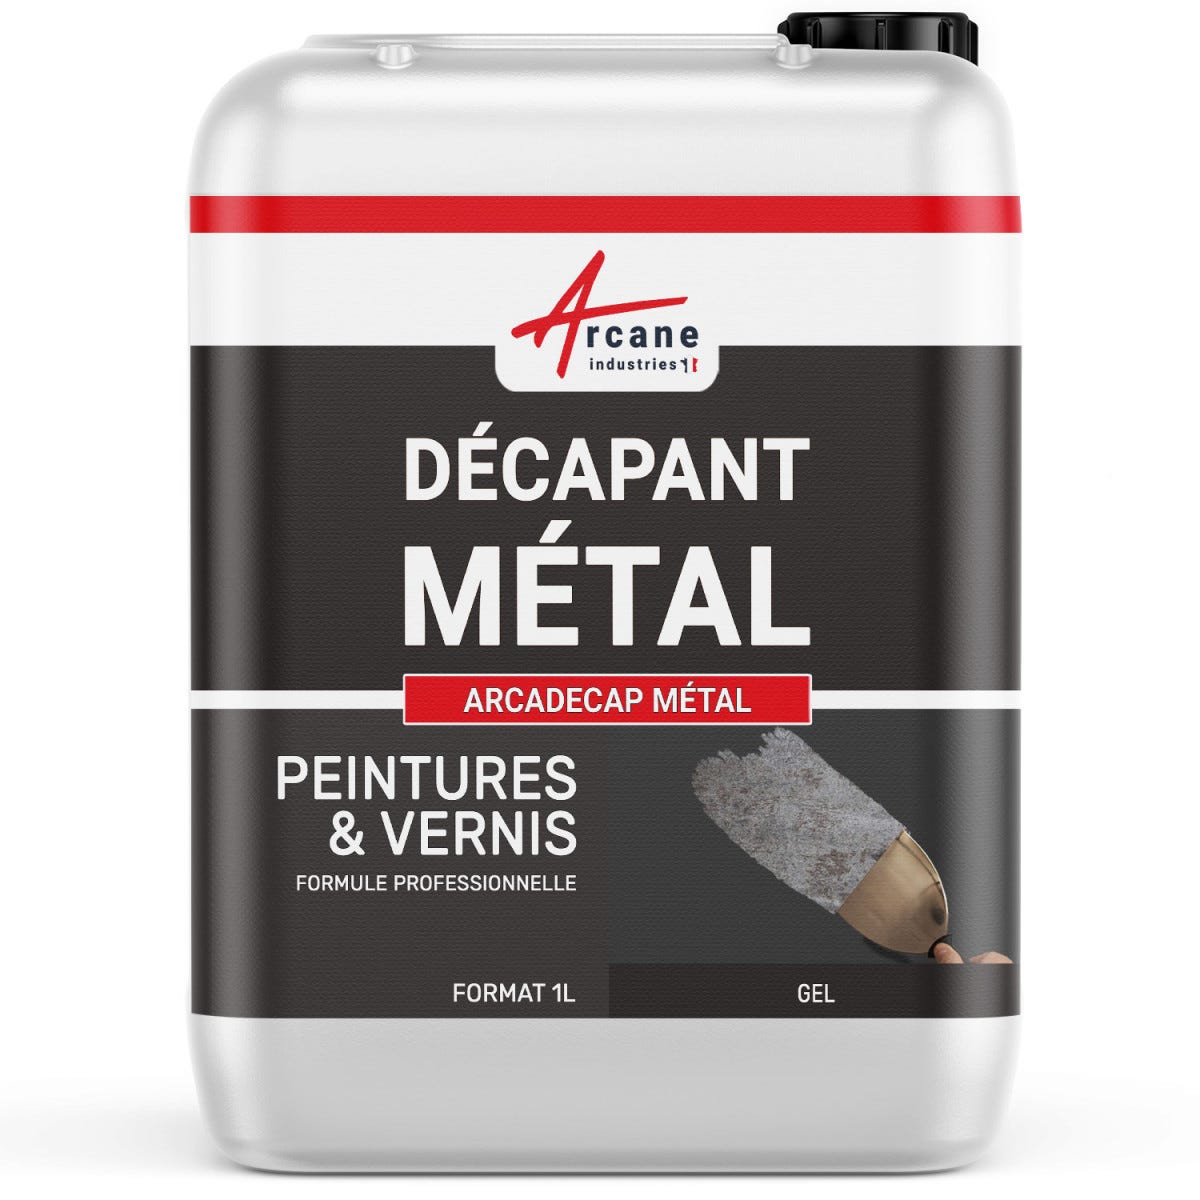 Decapante para pintura metálica - ARCADECAP METAL-1 L -ARCANE